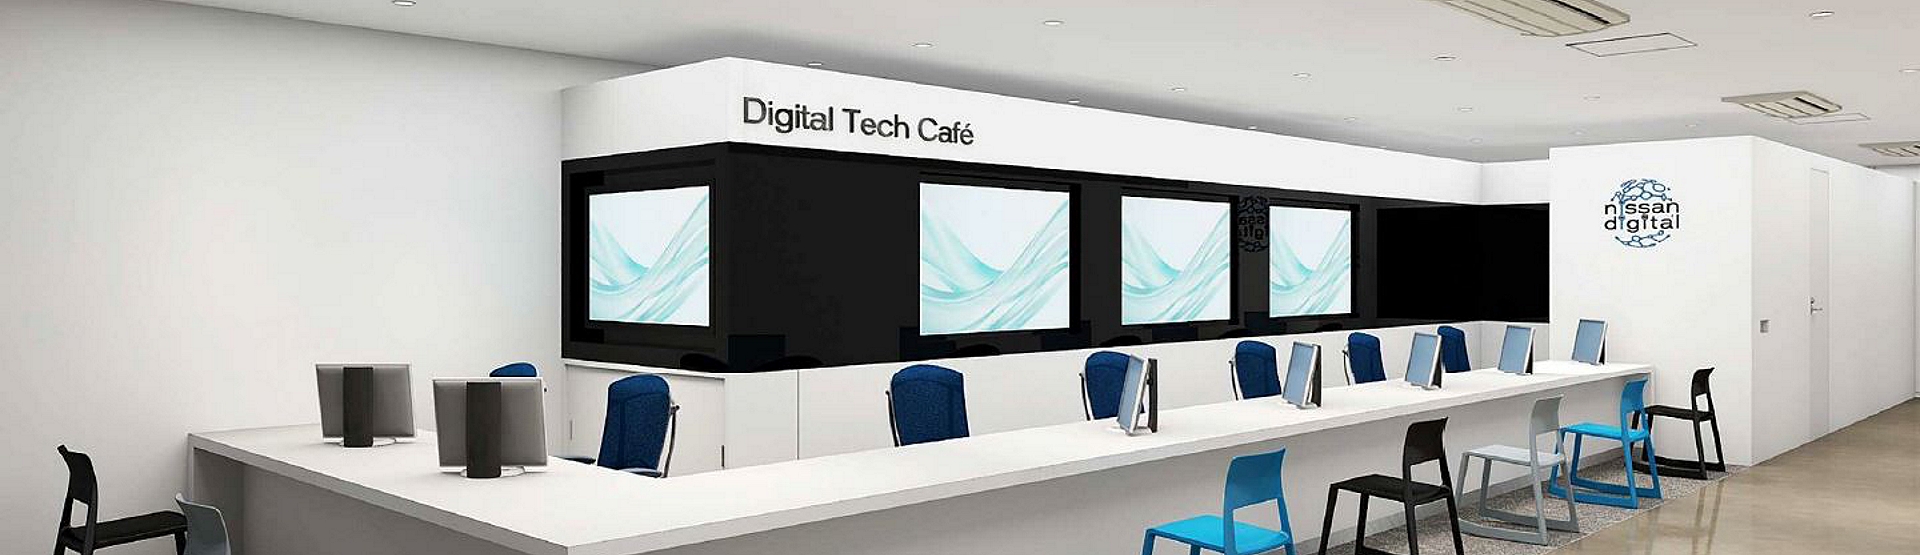 Digital Tech Cafe